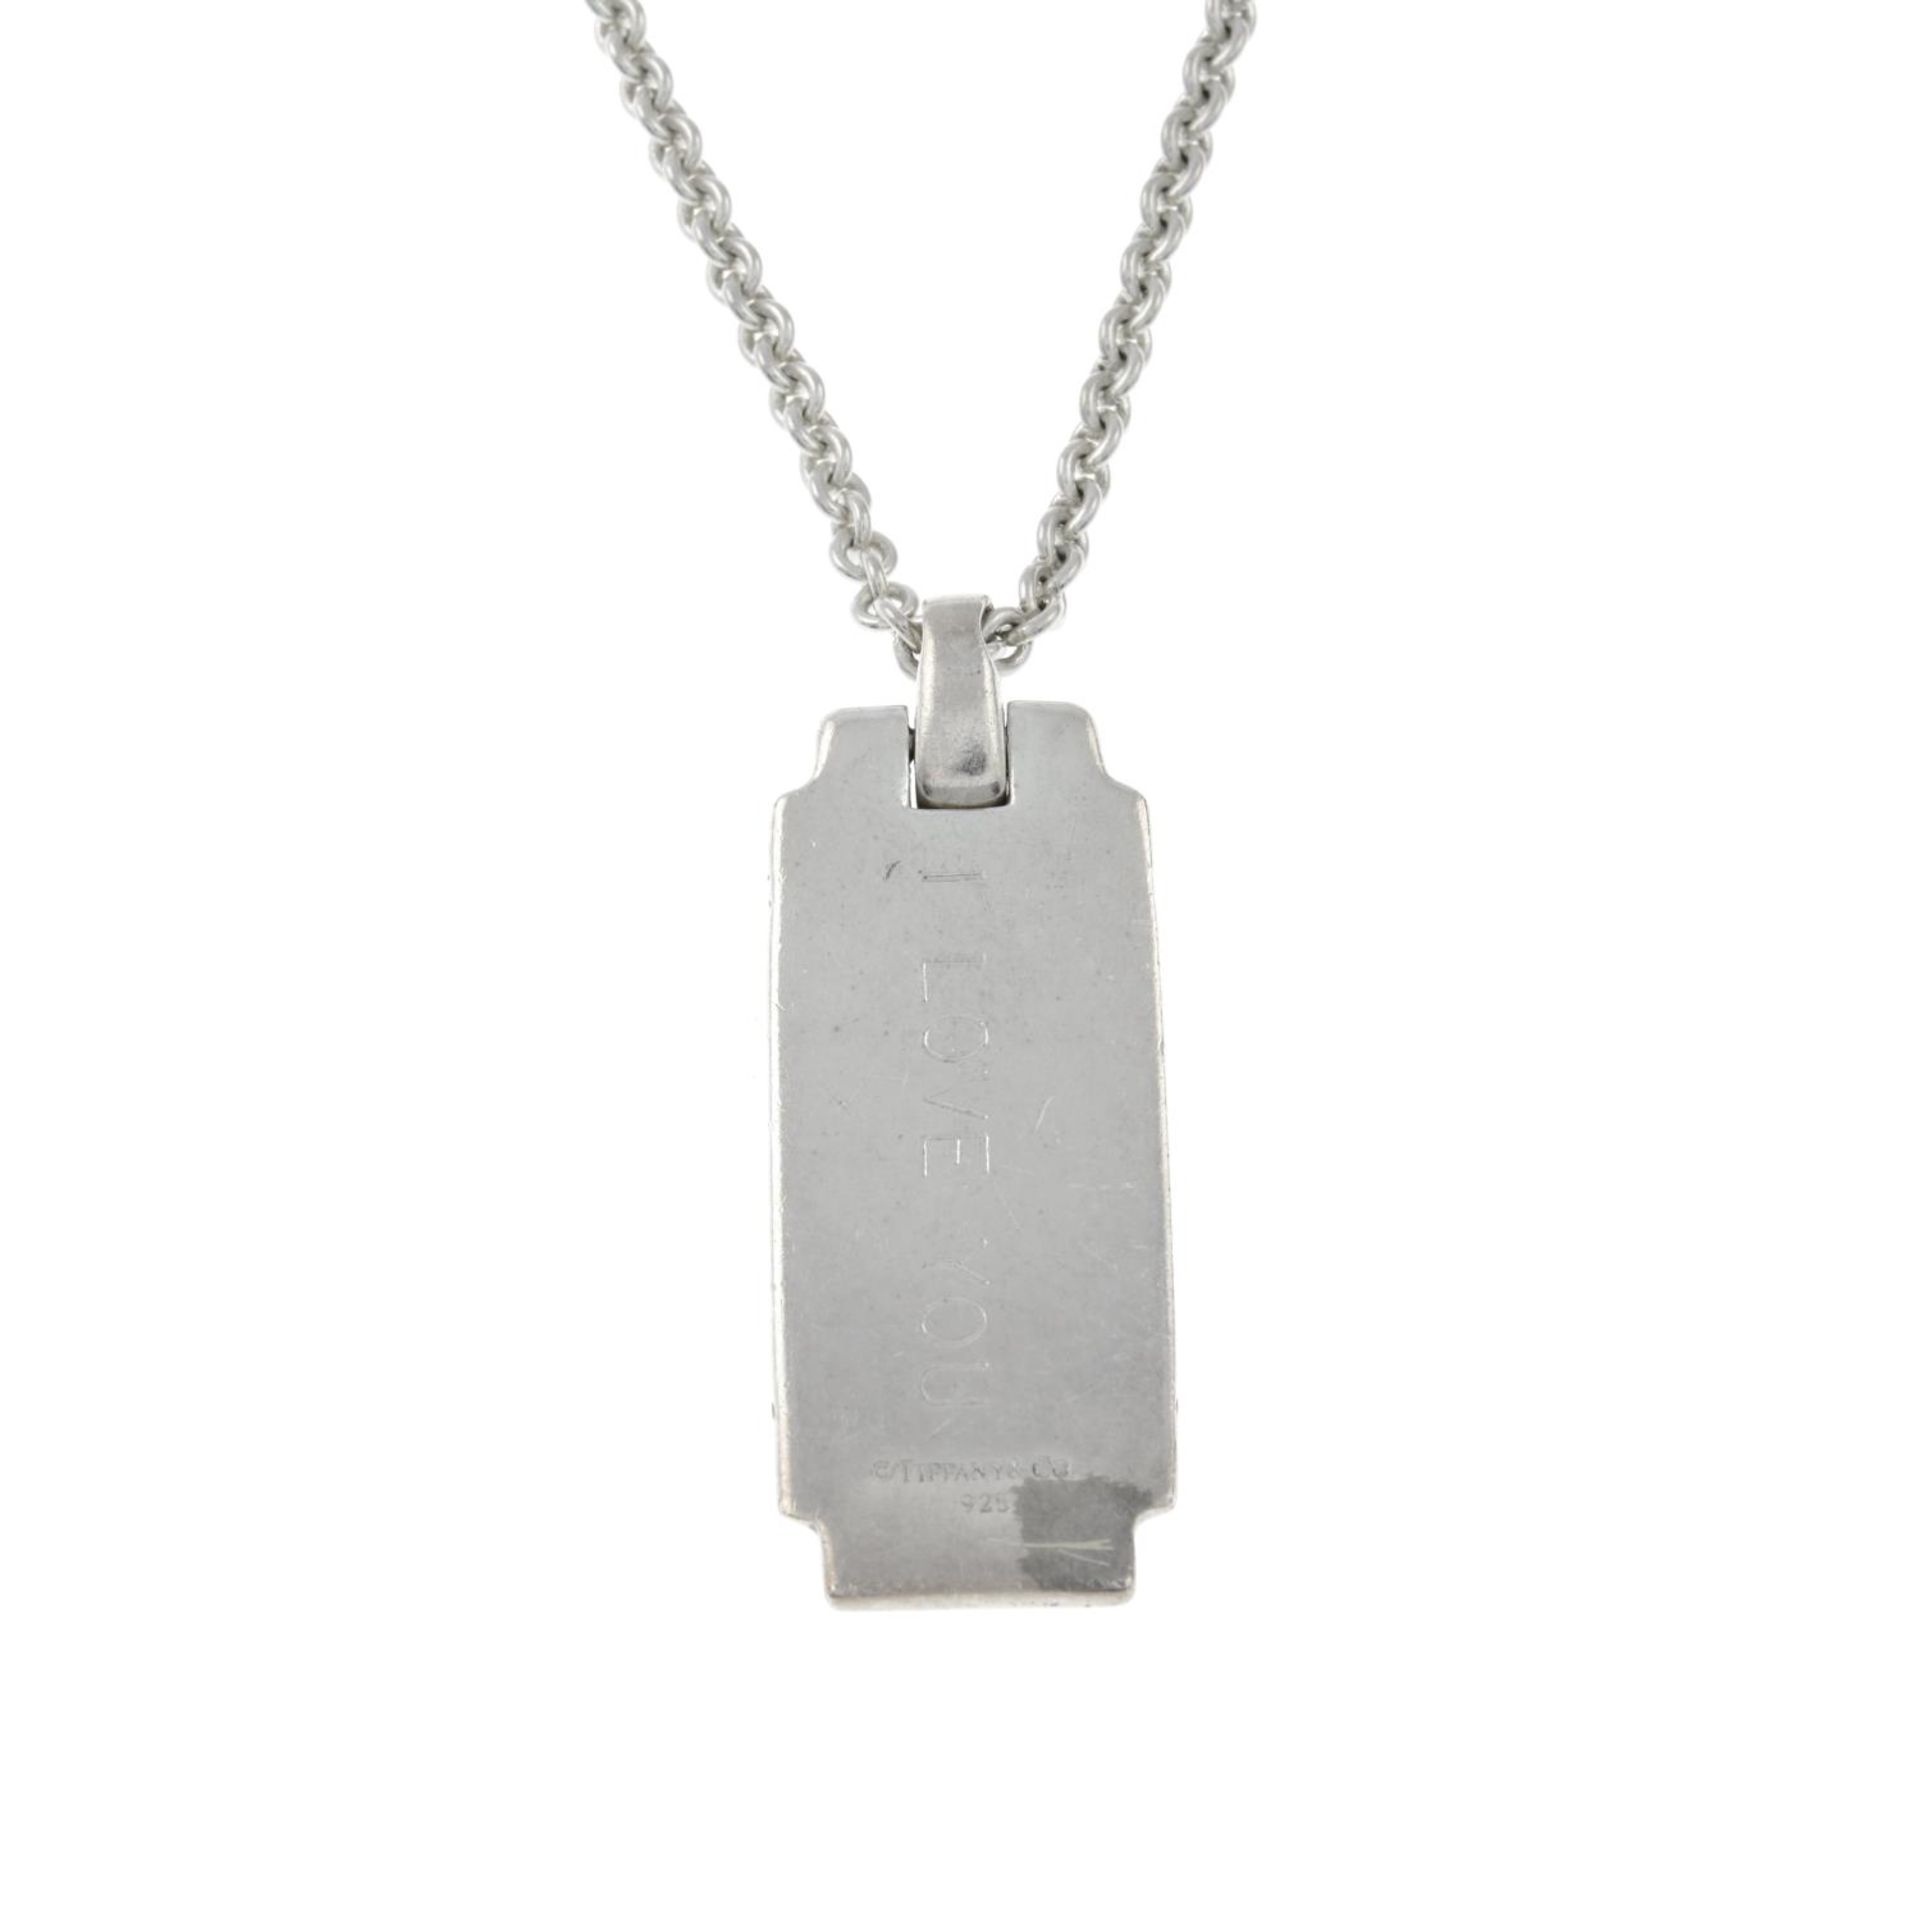 A silver 'Metropolis' pendant, - Image 2 of 3